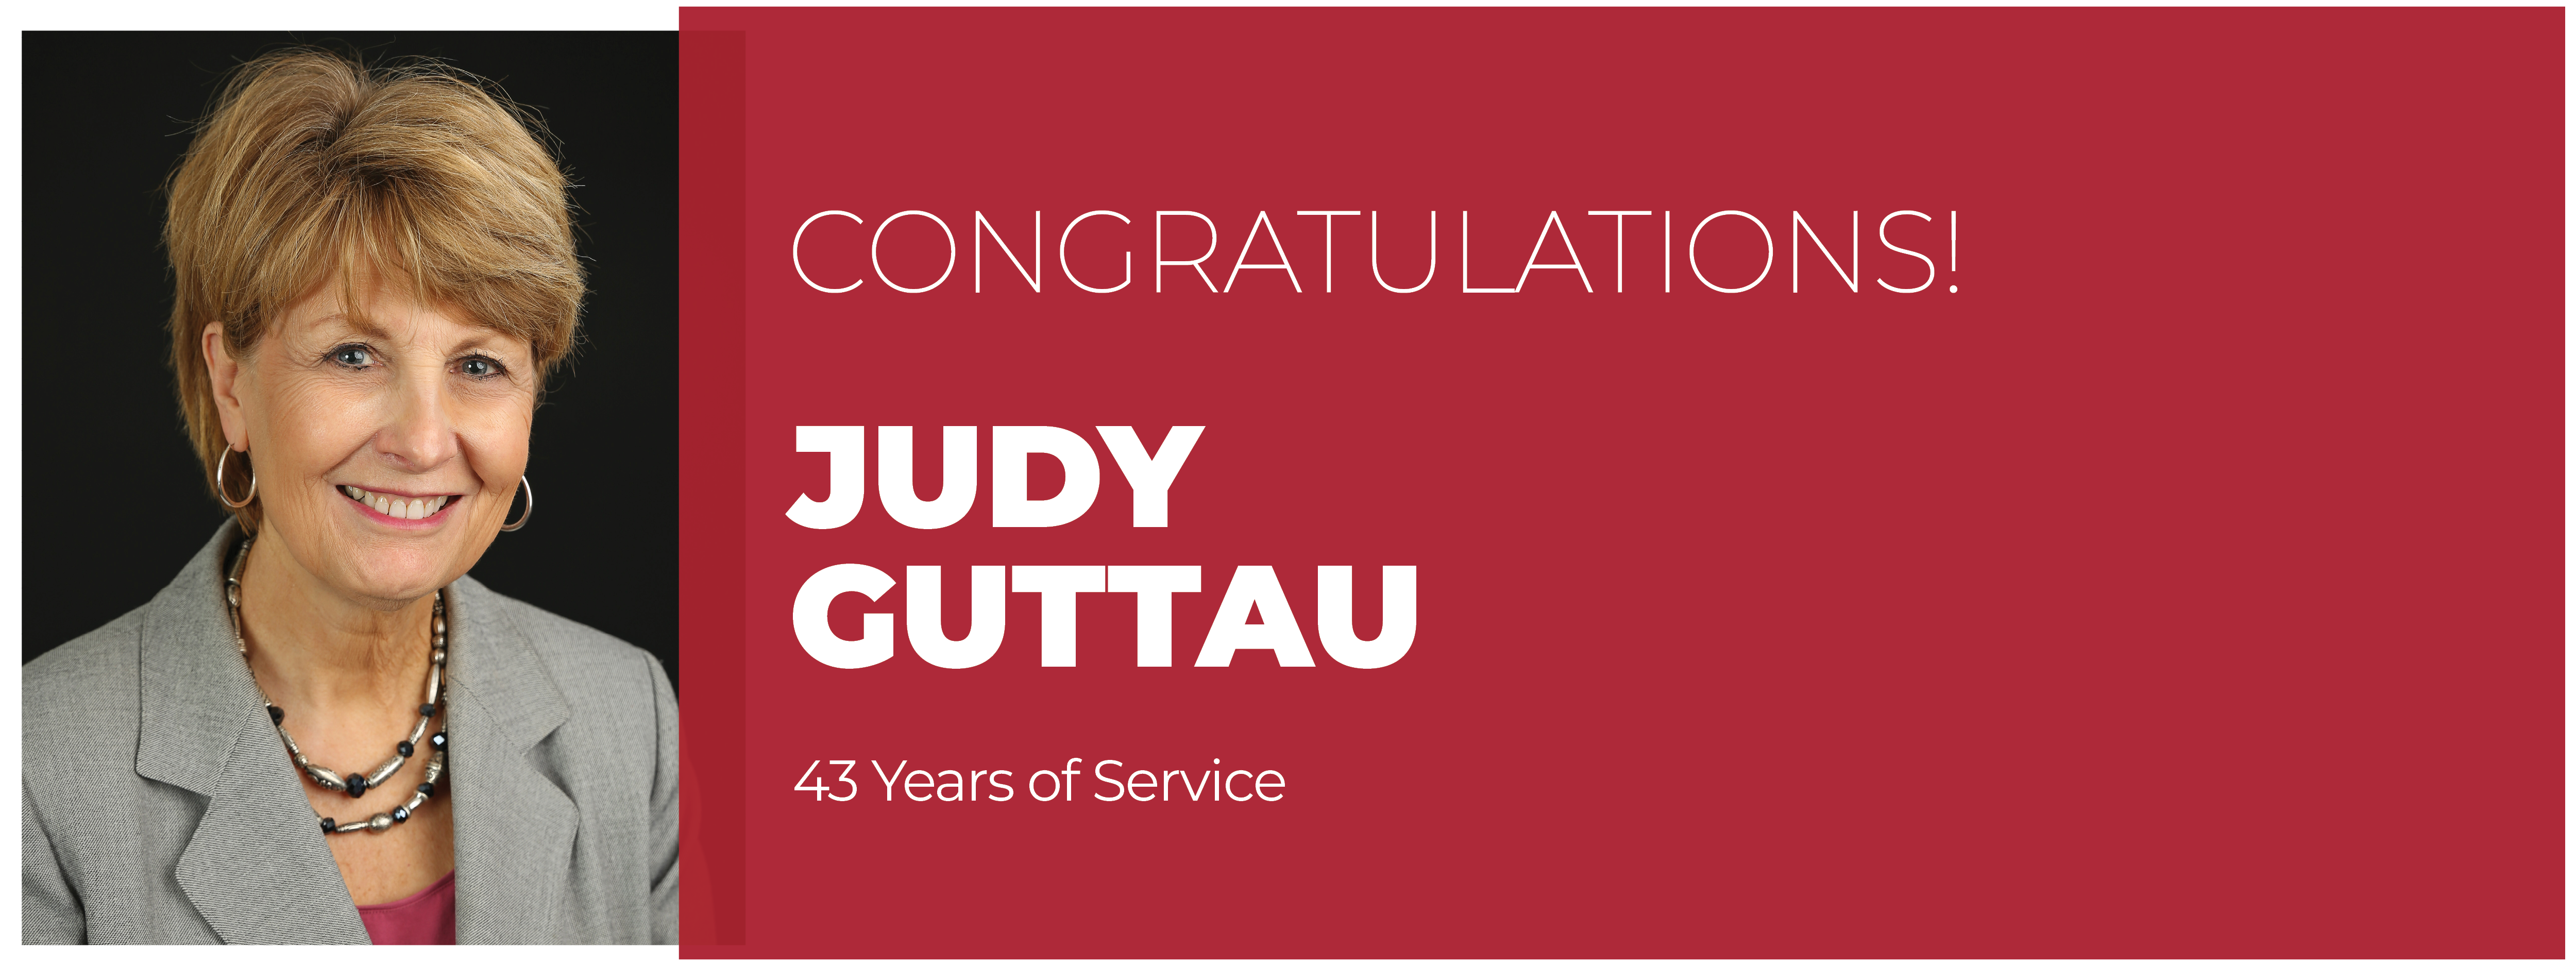 Judy Guttau congratulations